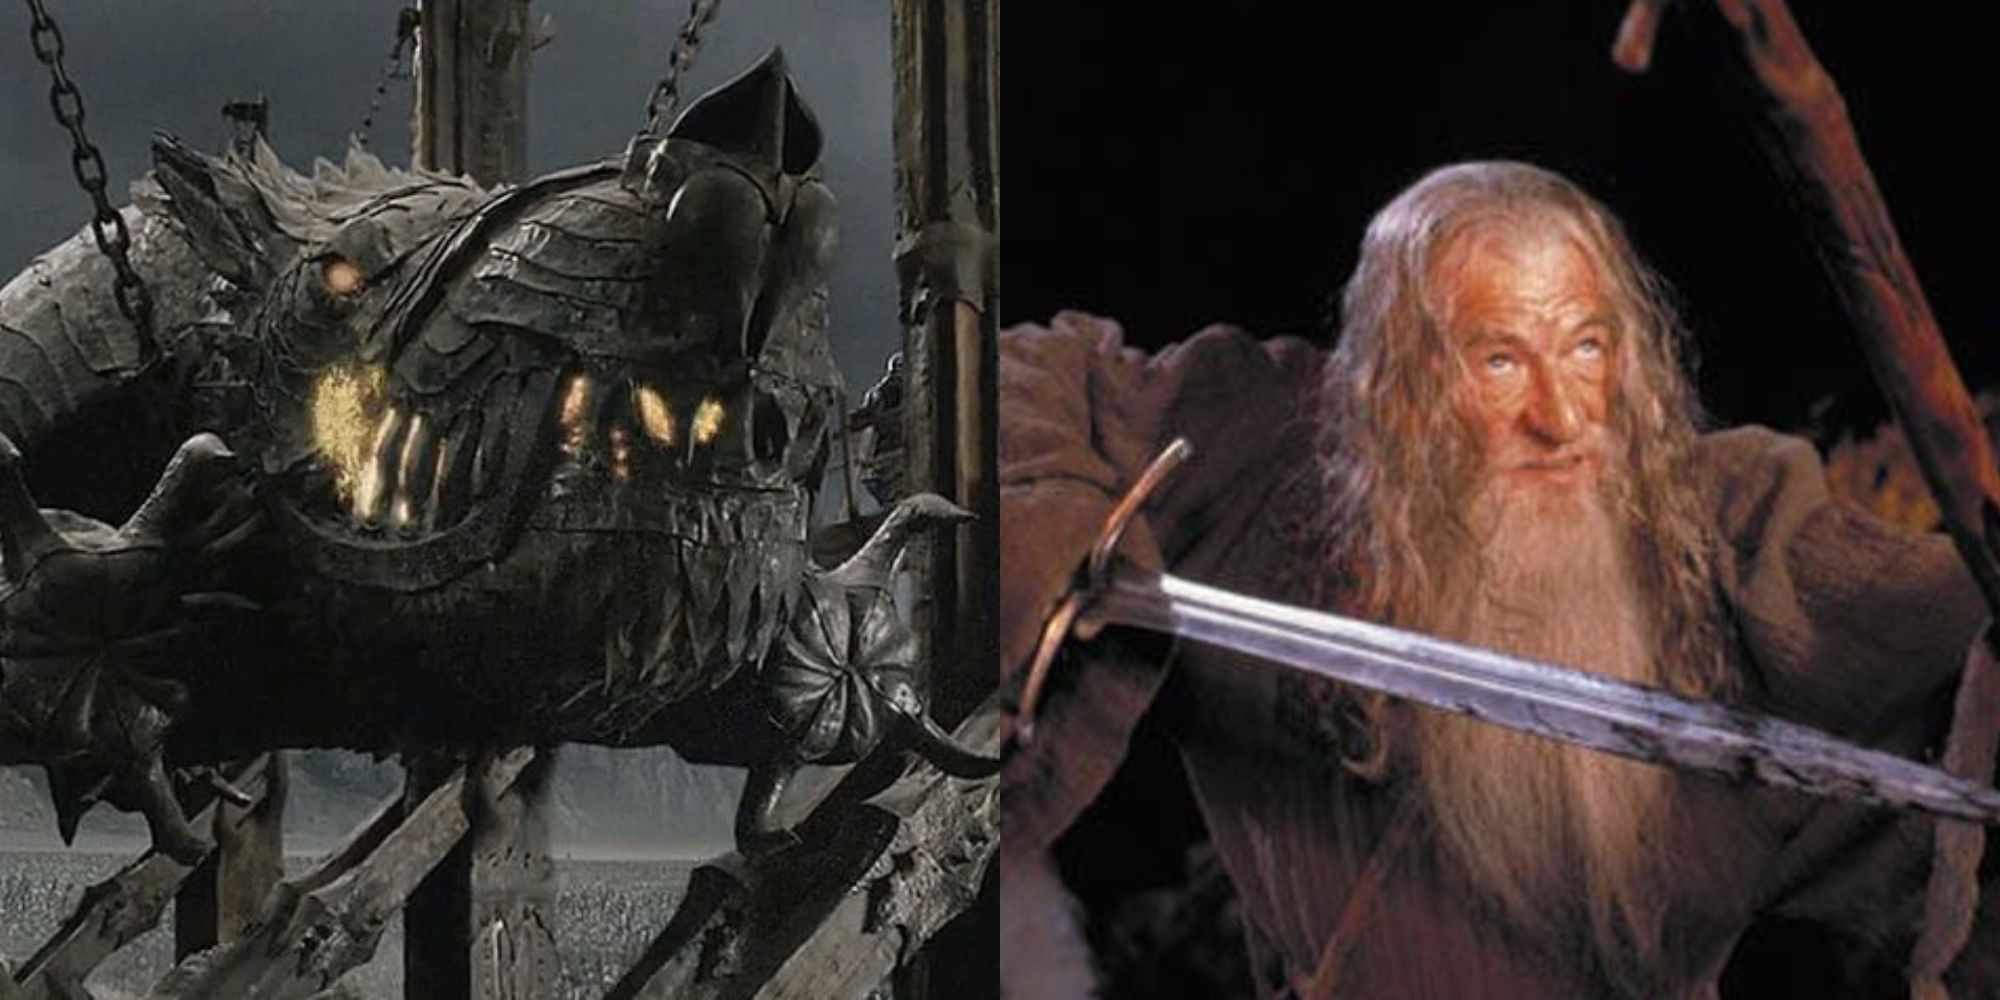 Sword of Bard I The Archer, The Hobbit ⚔️ Medieval Shop